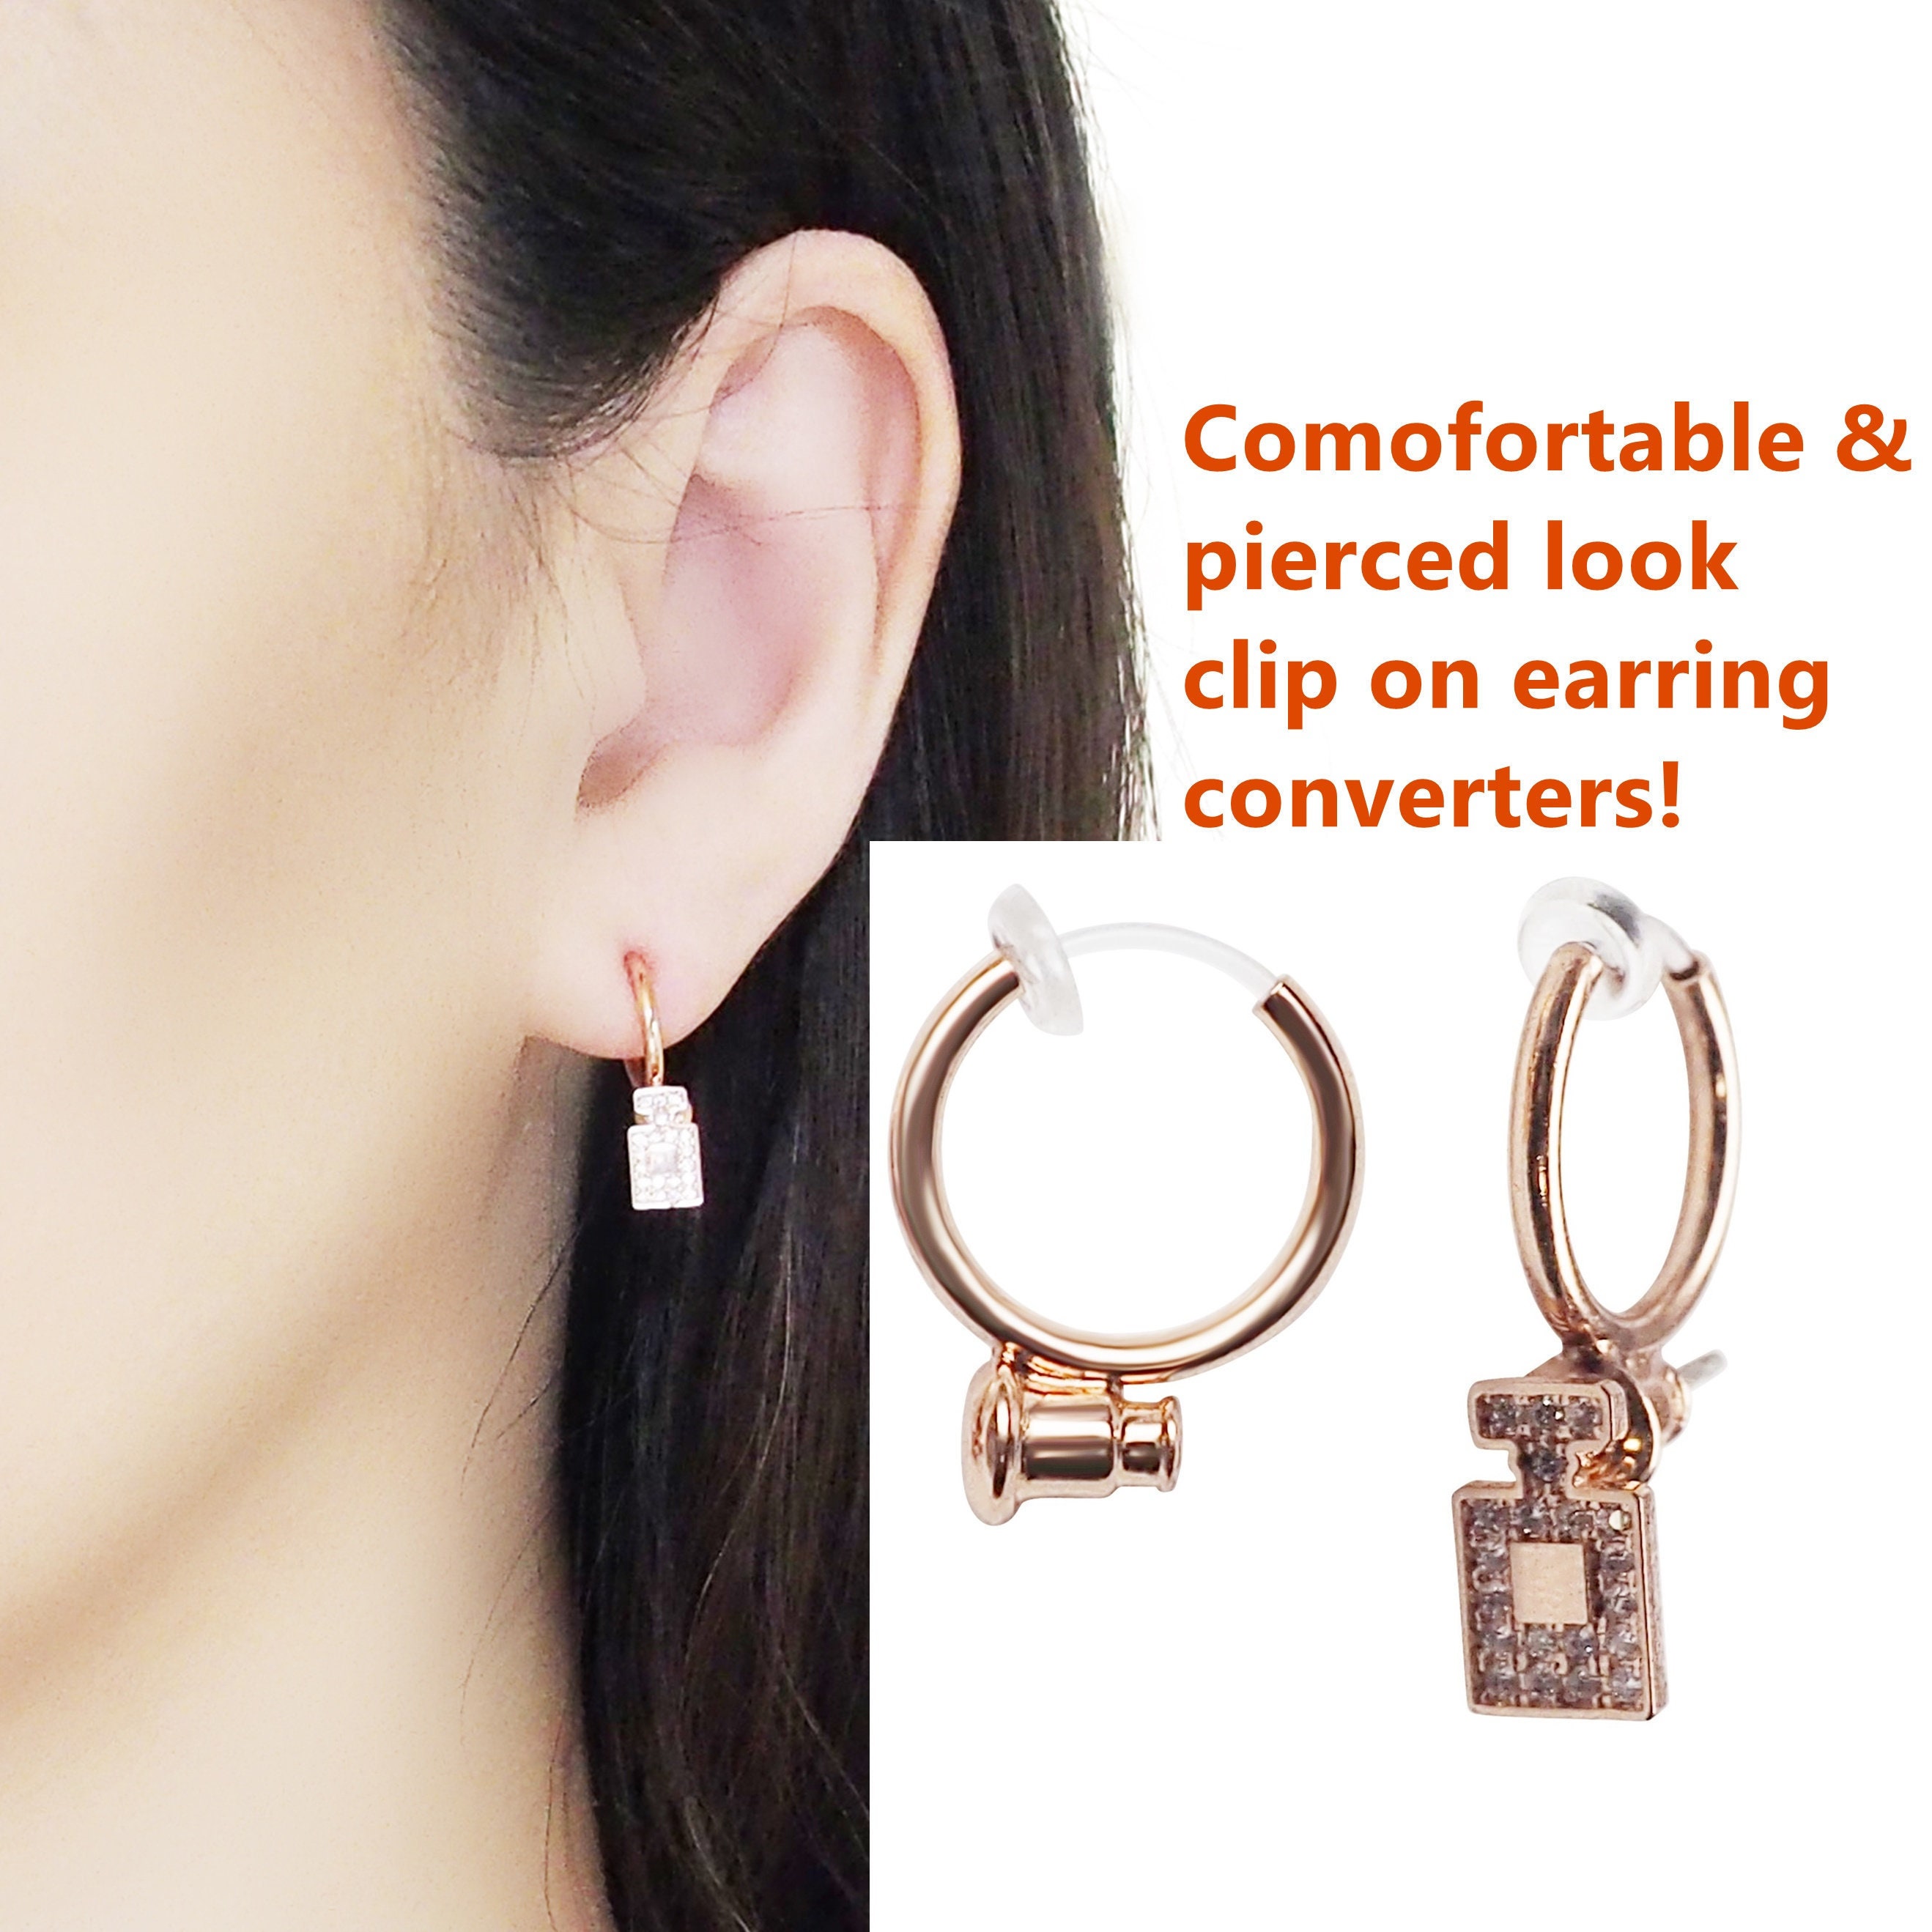 Pierced to Clip Earring Converter